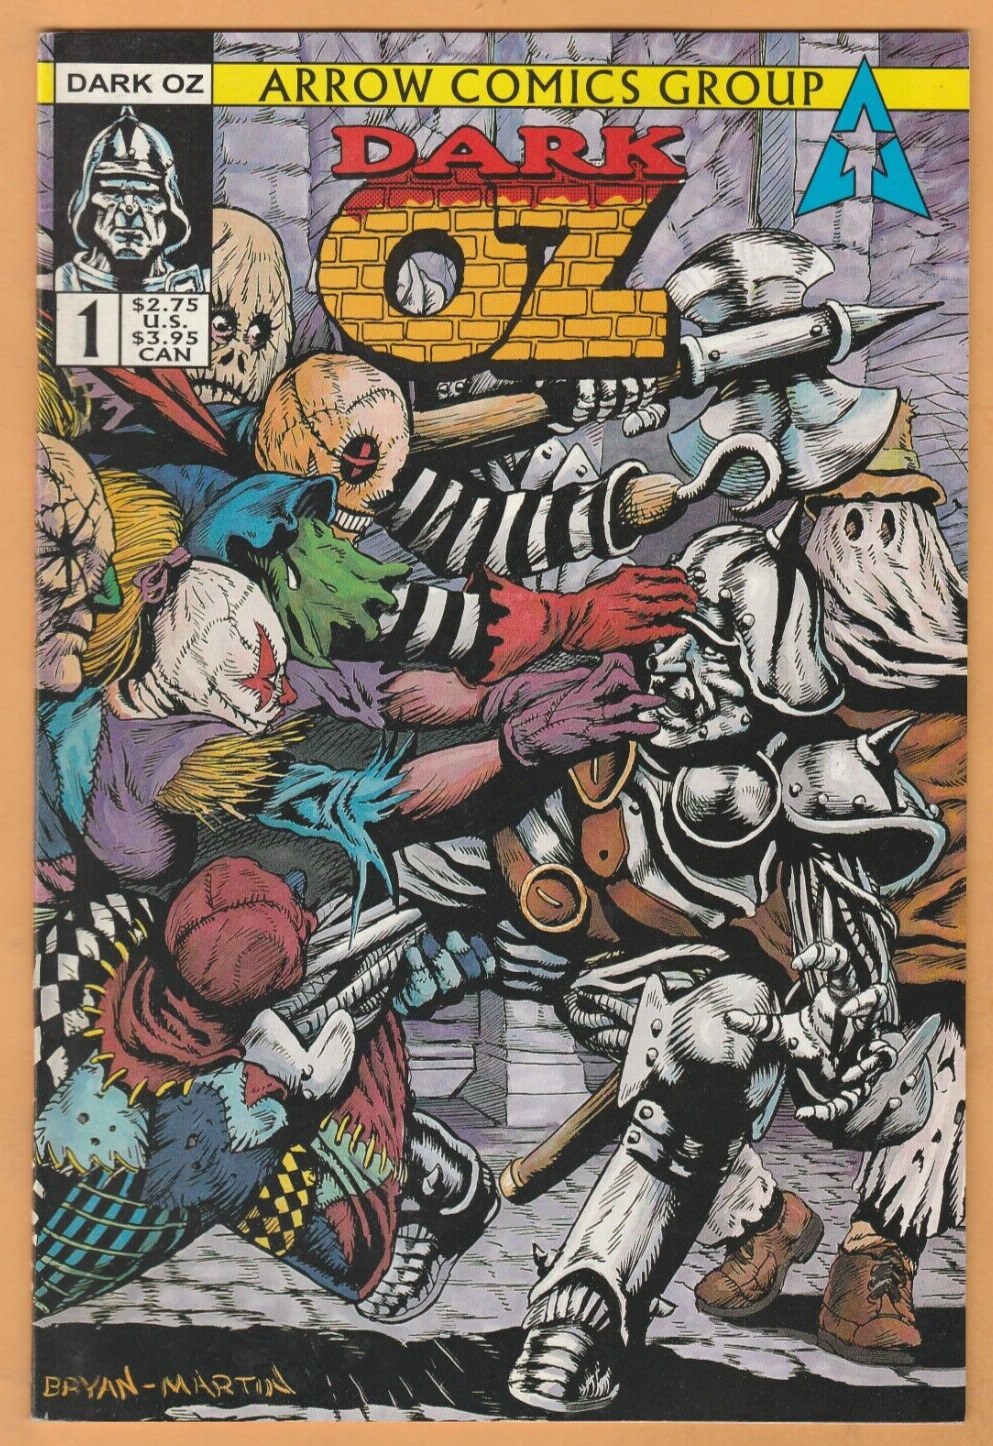 Dark Oz #1 - Arrow Comics - 1997 - VF